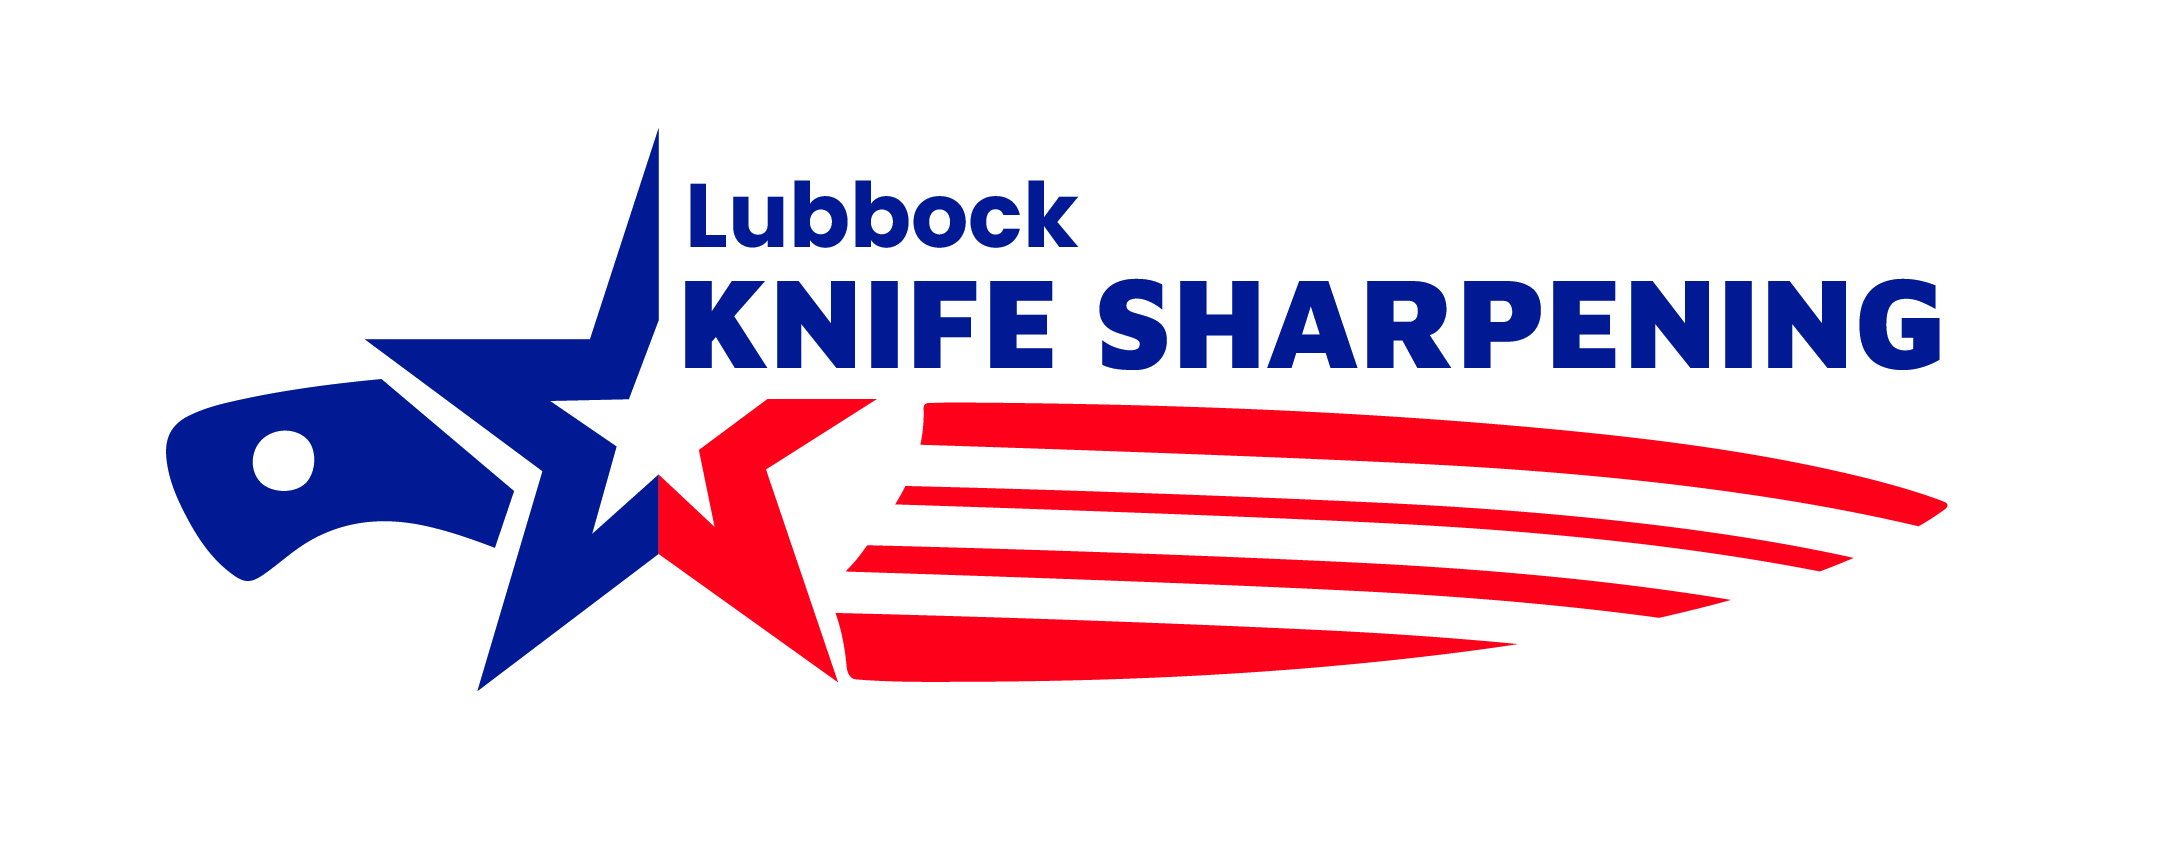 Blade Sharpening Services